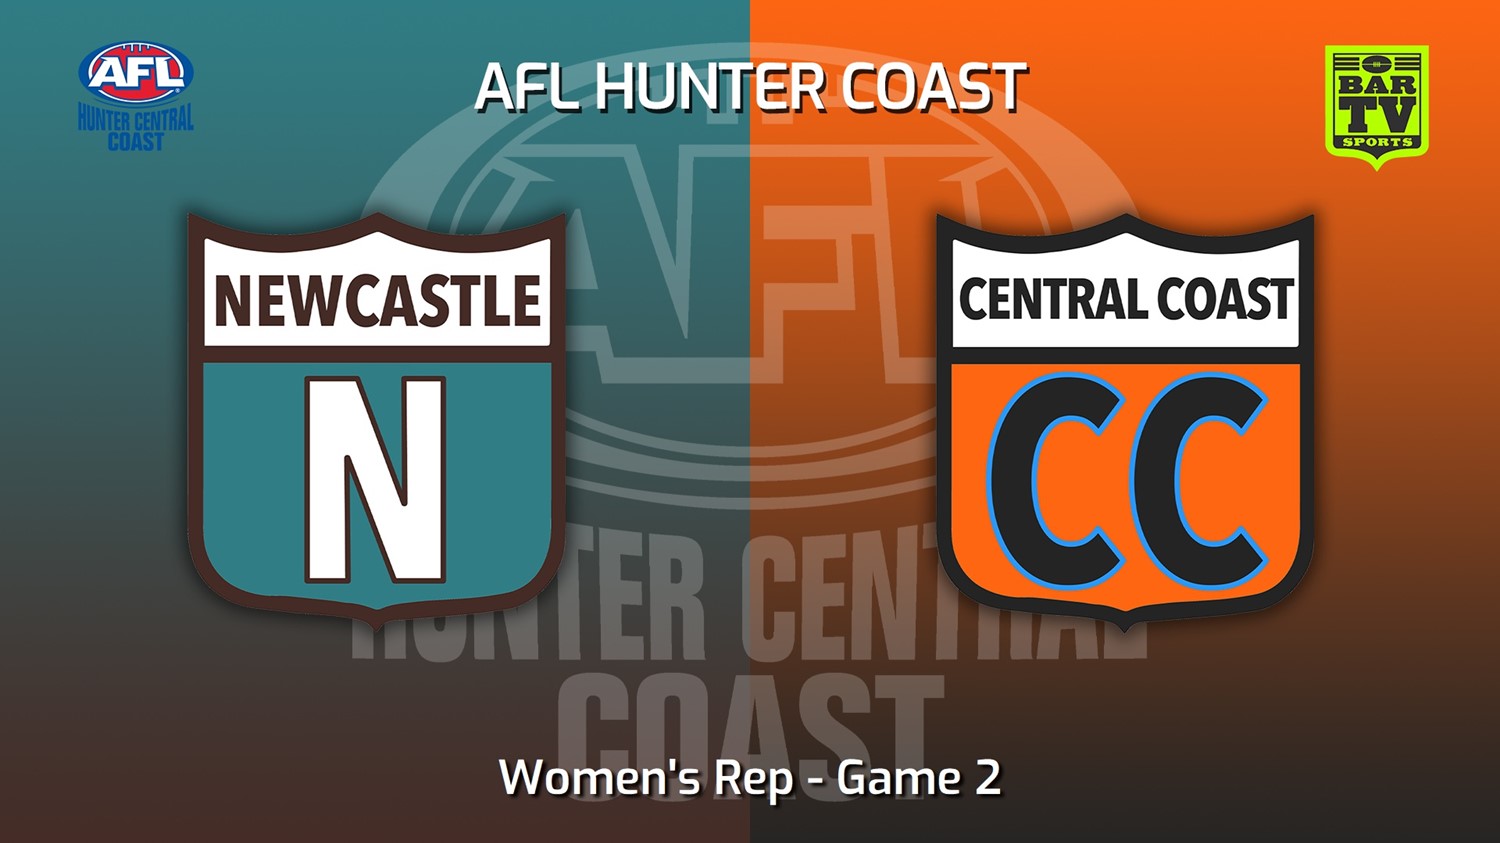 220610-AFL Hunter Central Coast Game 2 - Women's Rep - Newcastle v Central Coast Minigame Slate Image